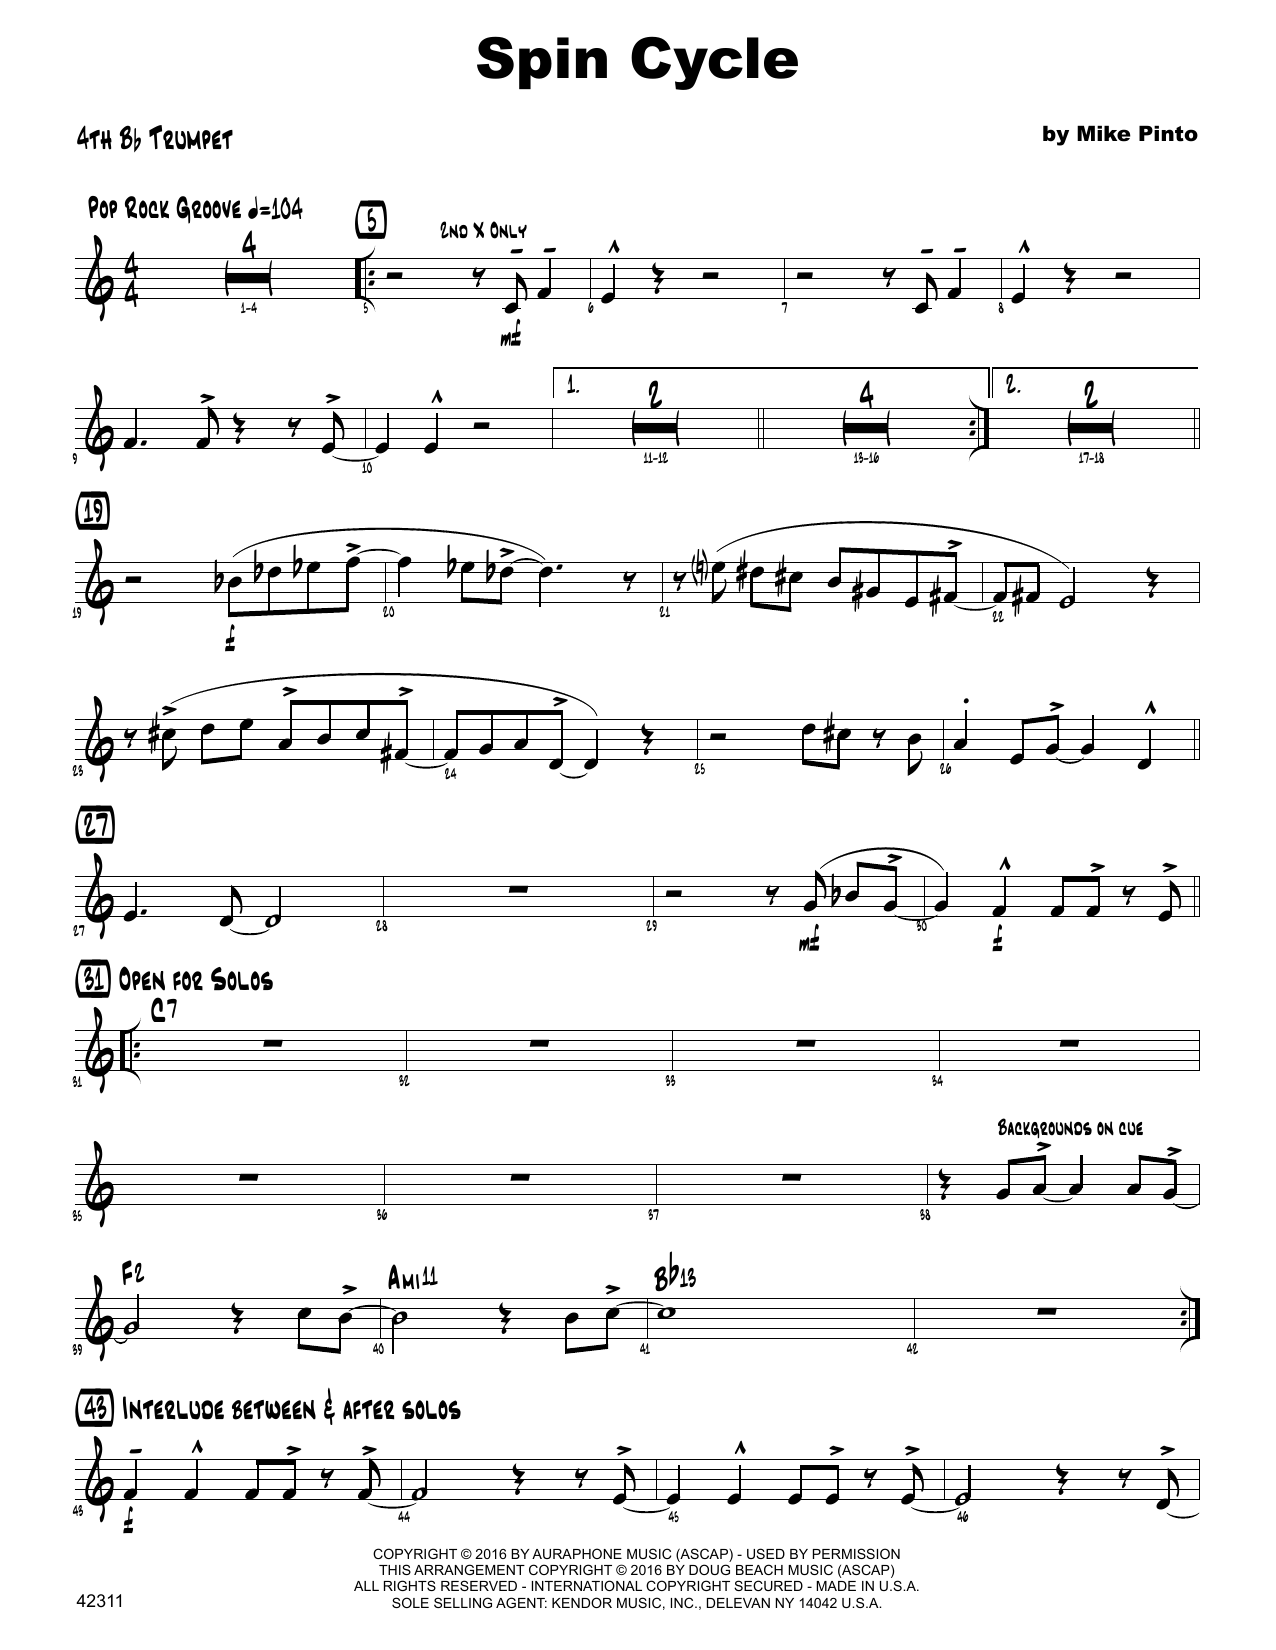 Spin Cycle - 4th Bb Trumpet (Jazz Ensemble) von Mike Pinto